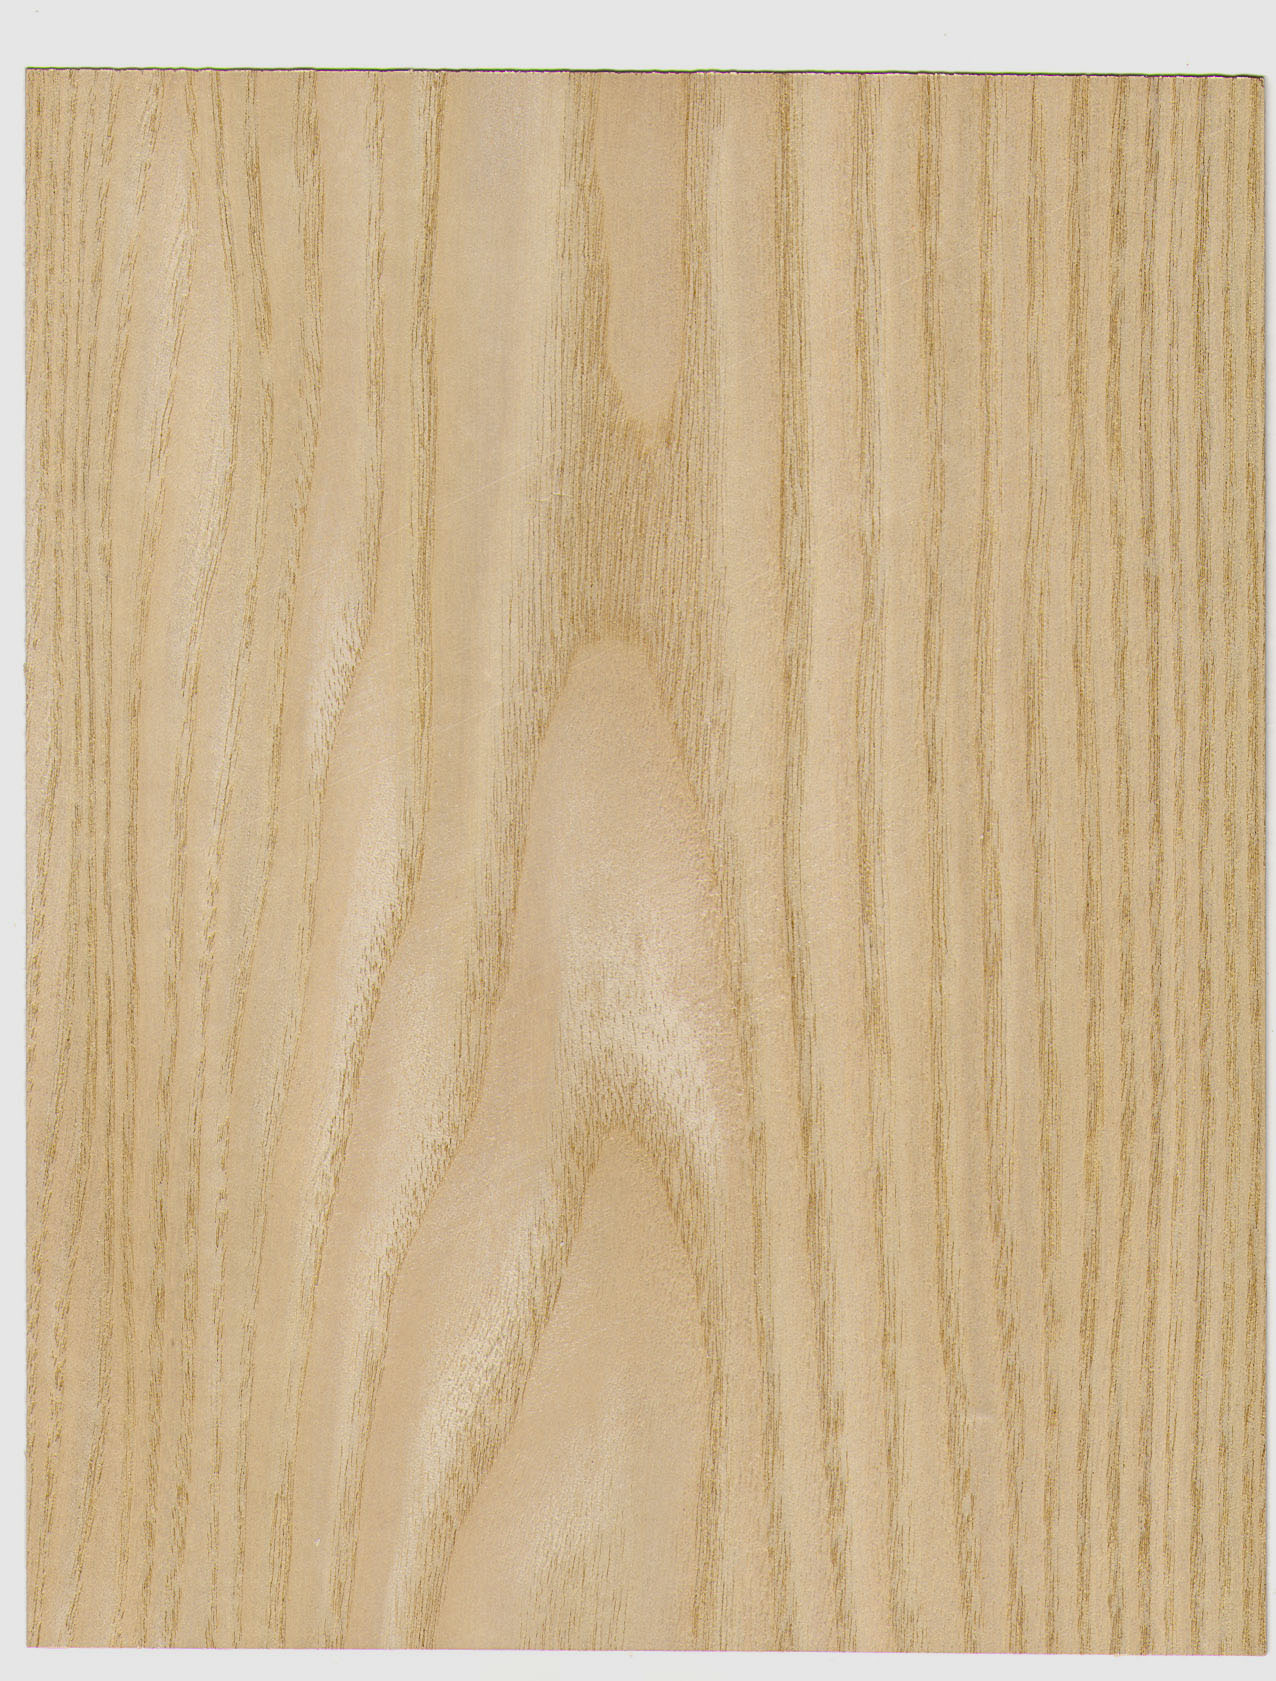 wood Texture, laminate, download photo background, wood background texture image